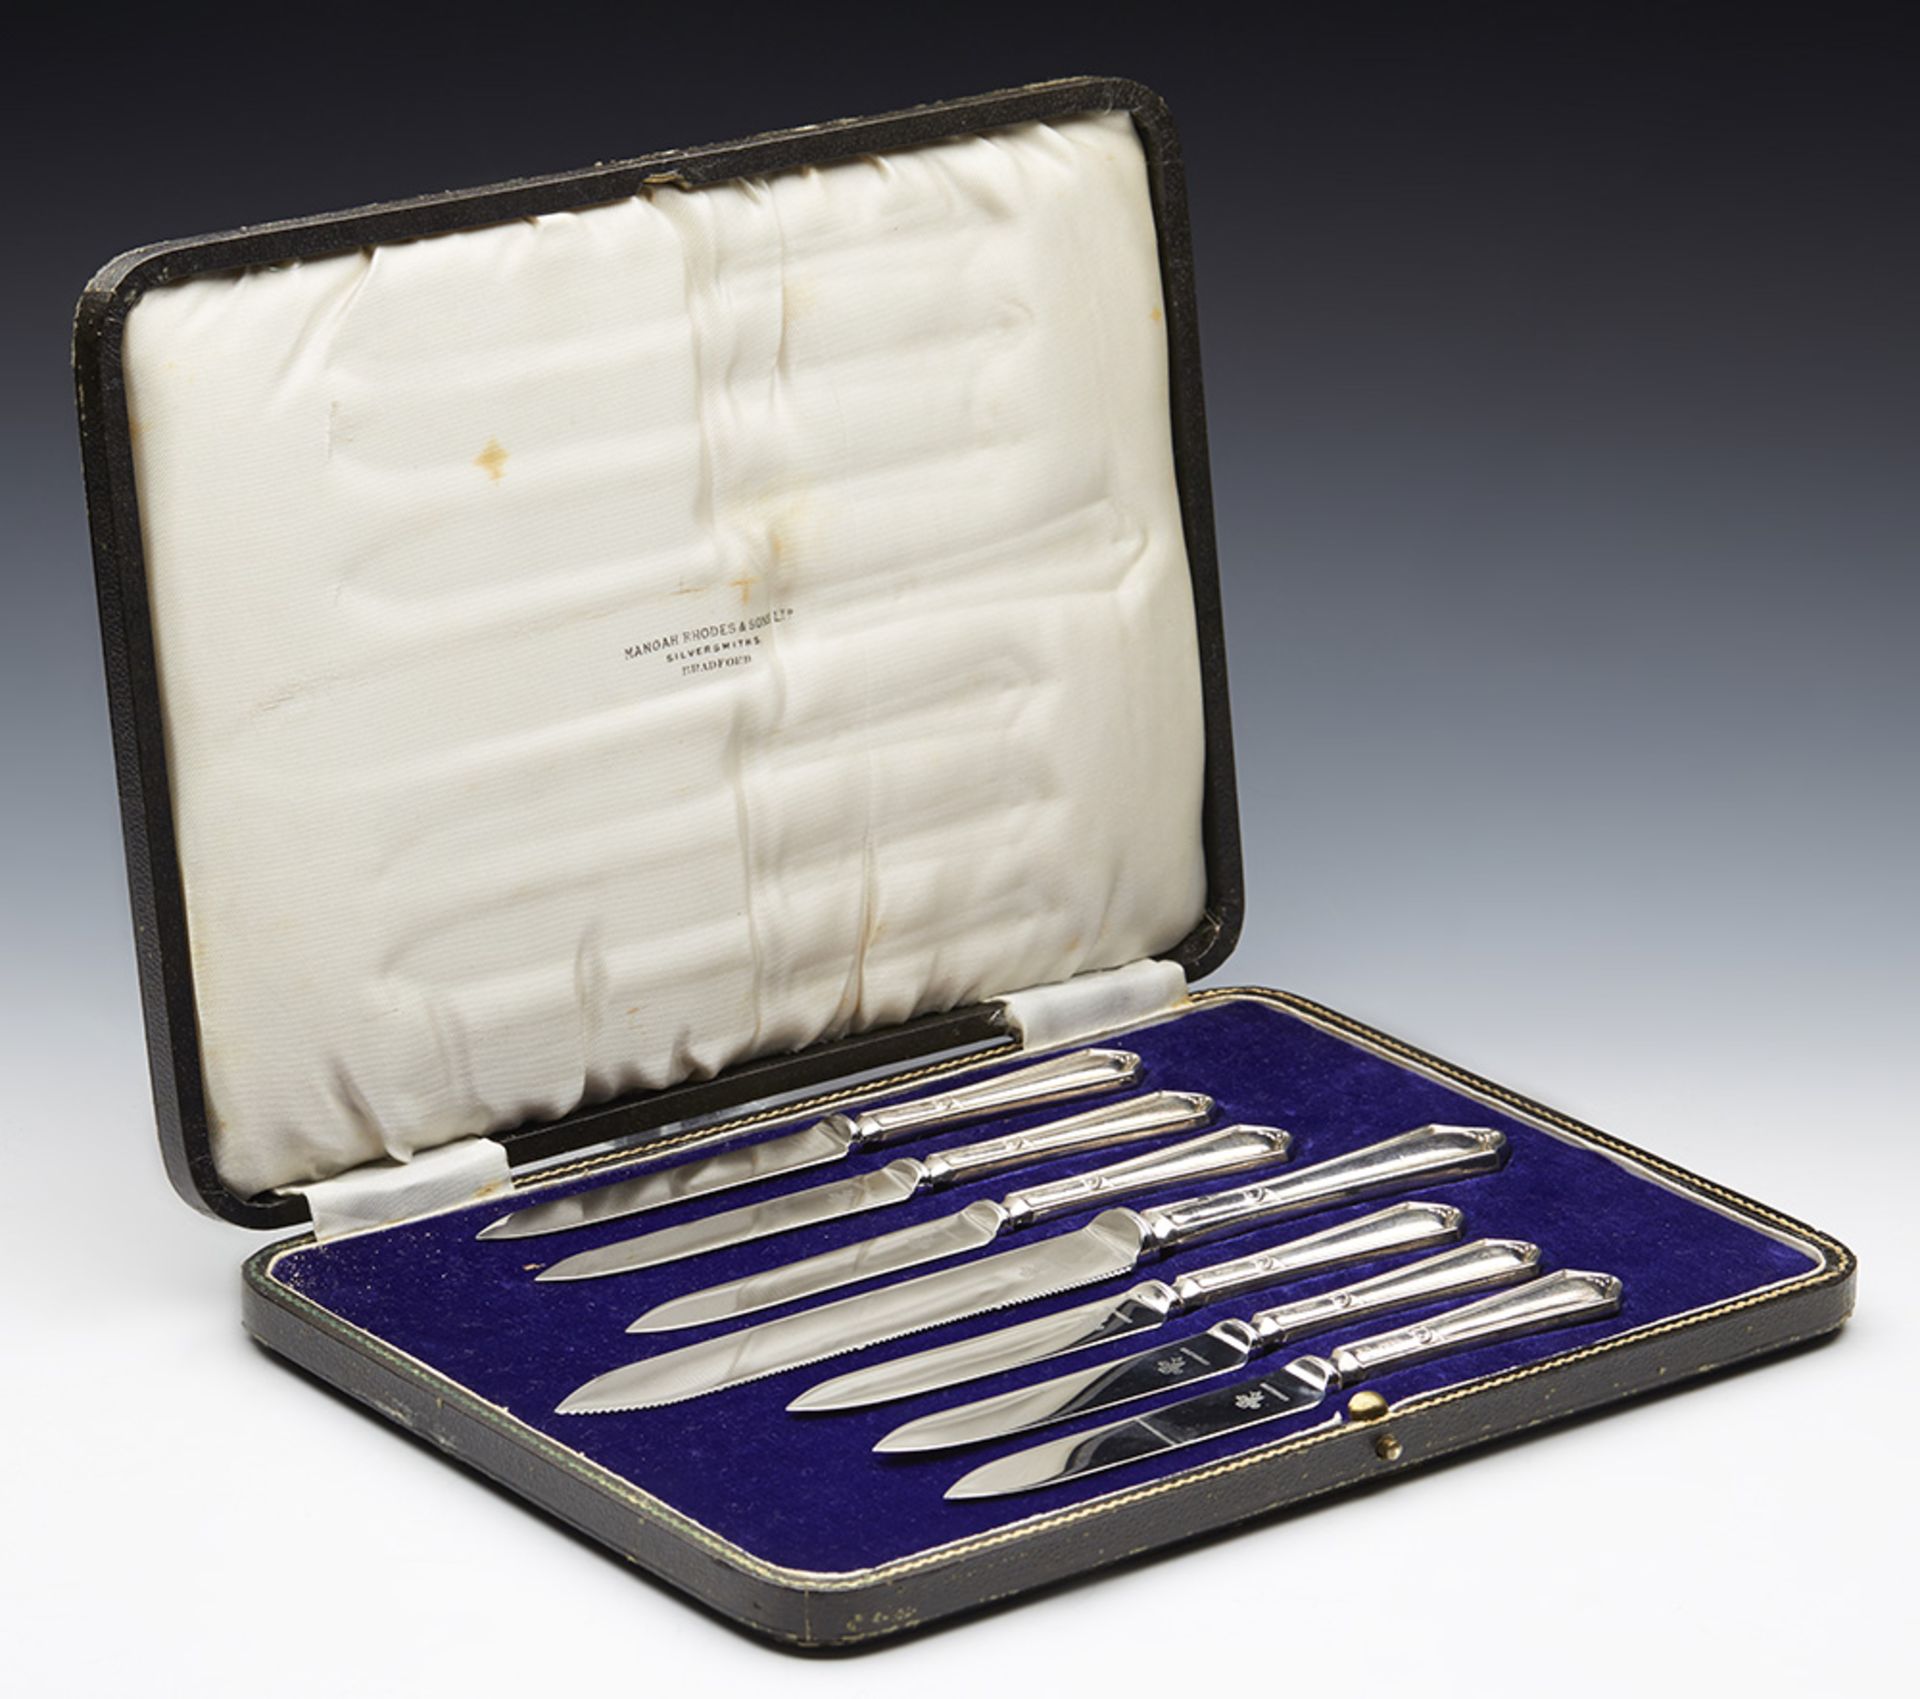 ART DECO SILVER CAKE KNIFE SET BY ATKIN BROS. 1931-33